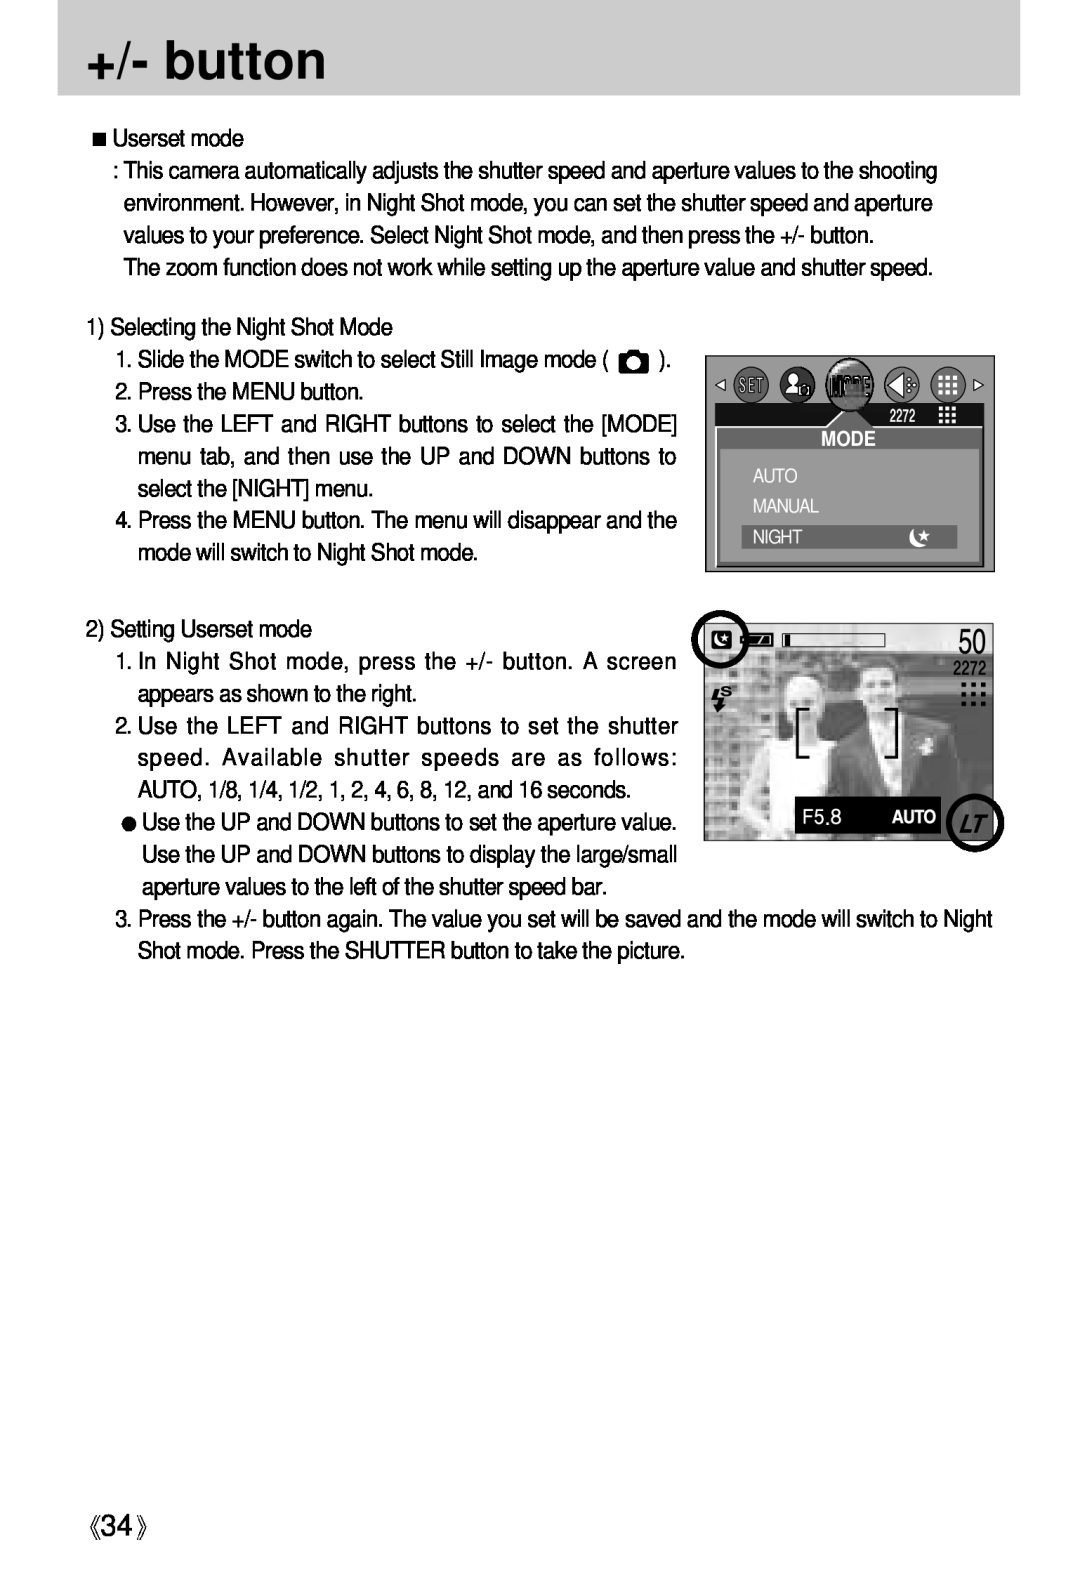 Samsung Digimax U-CA user manual +/- button, Userset mode 